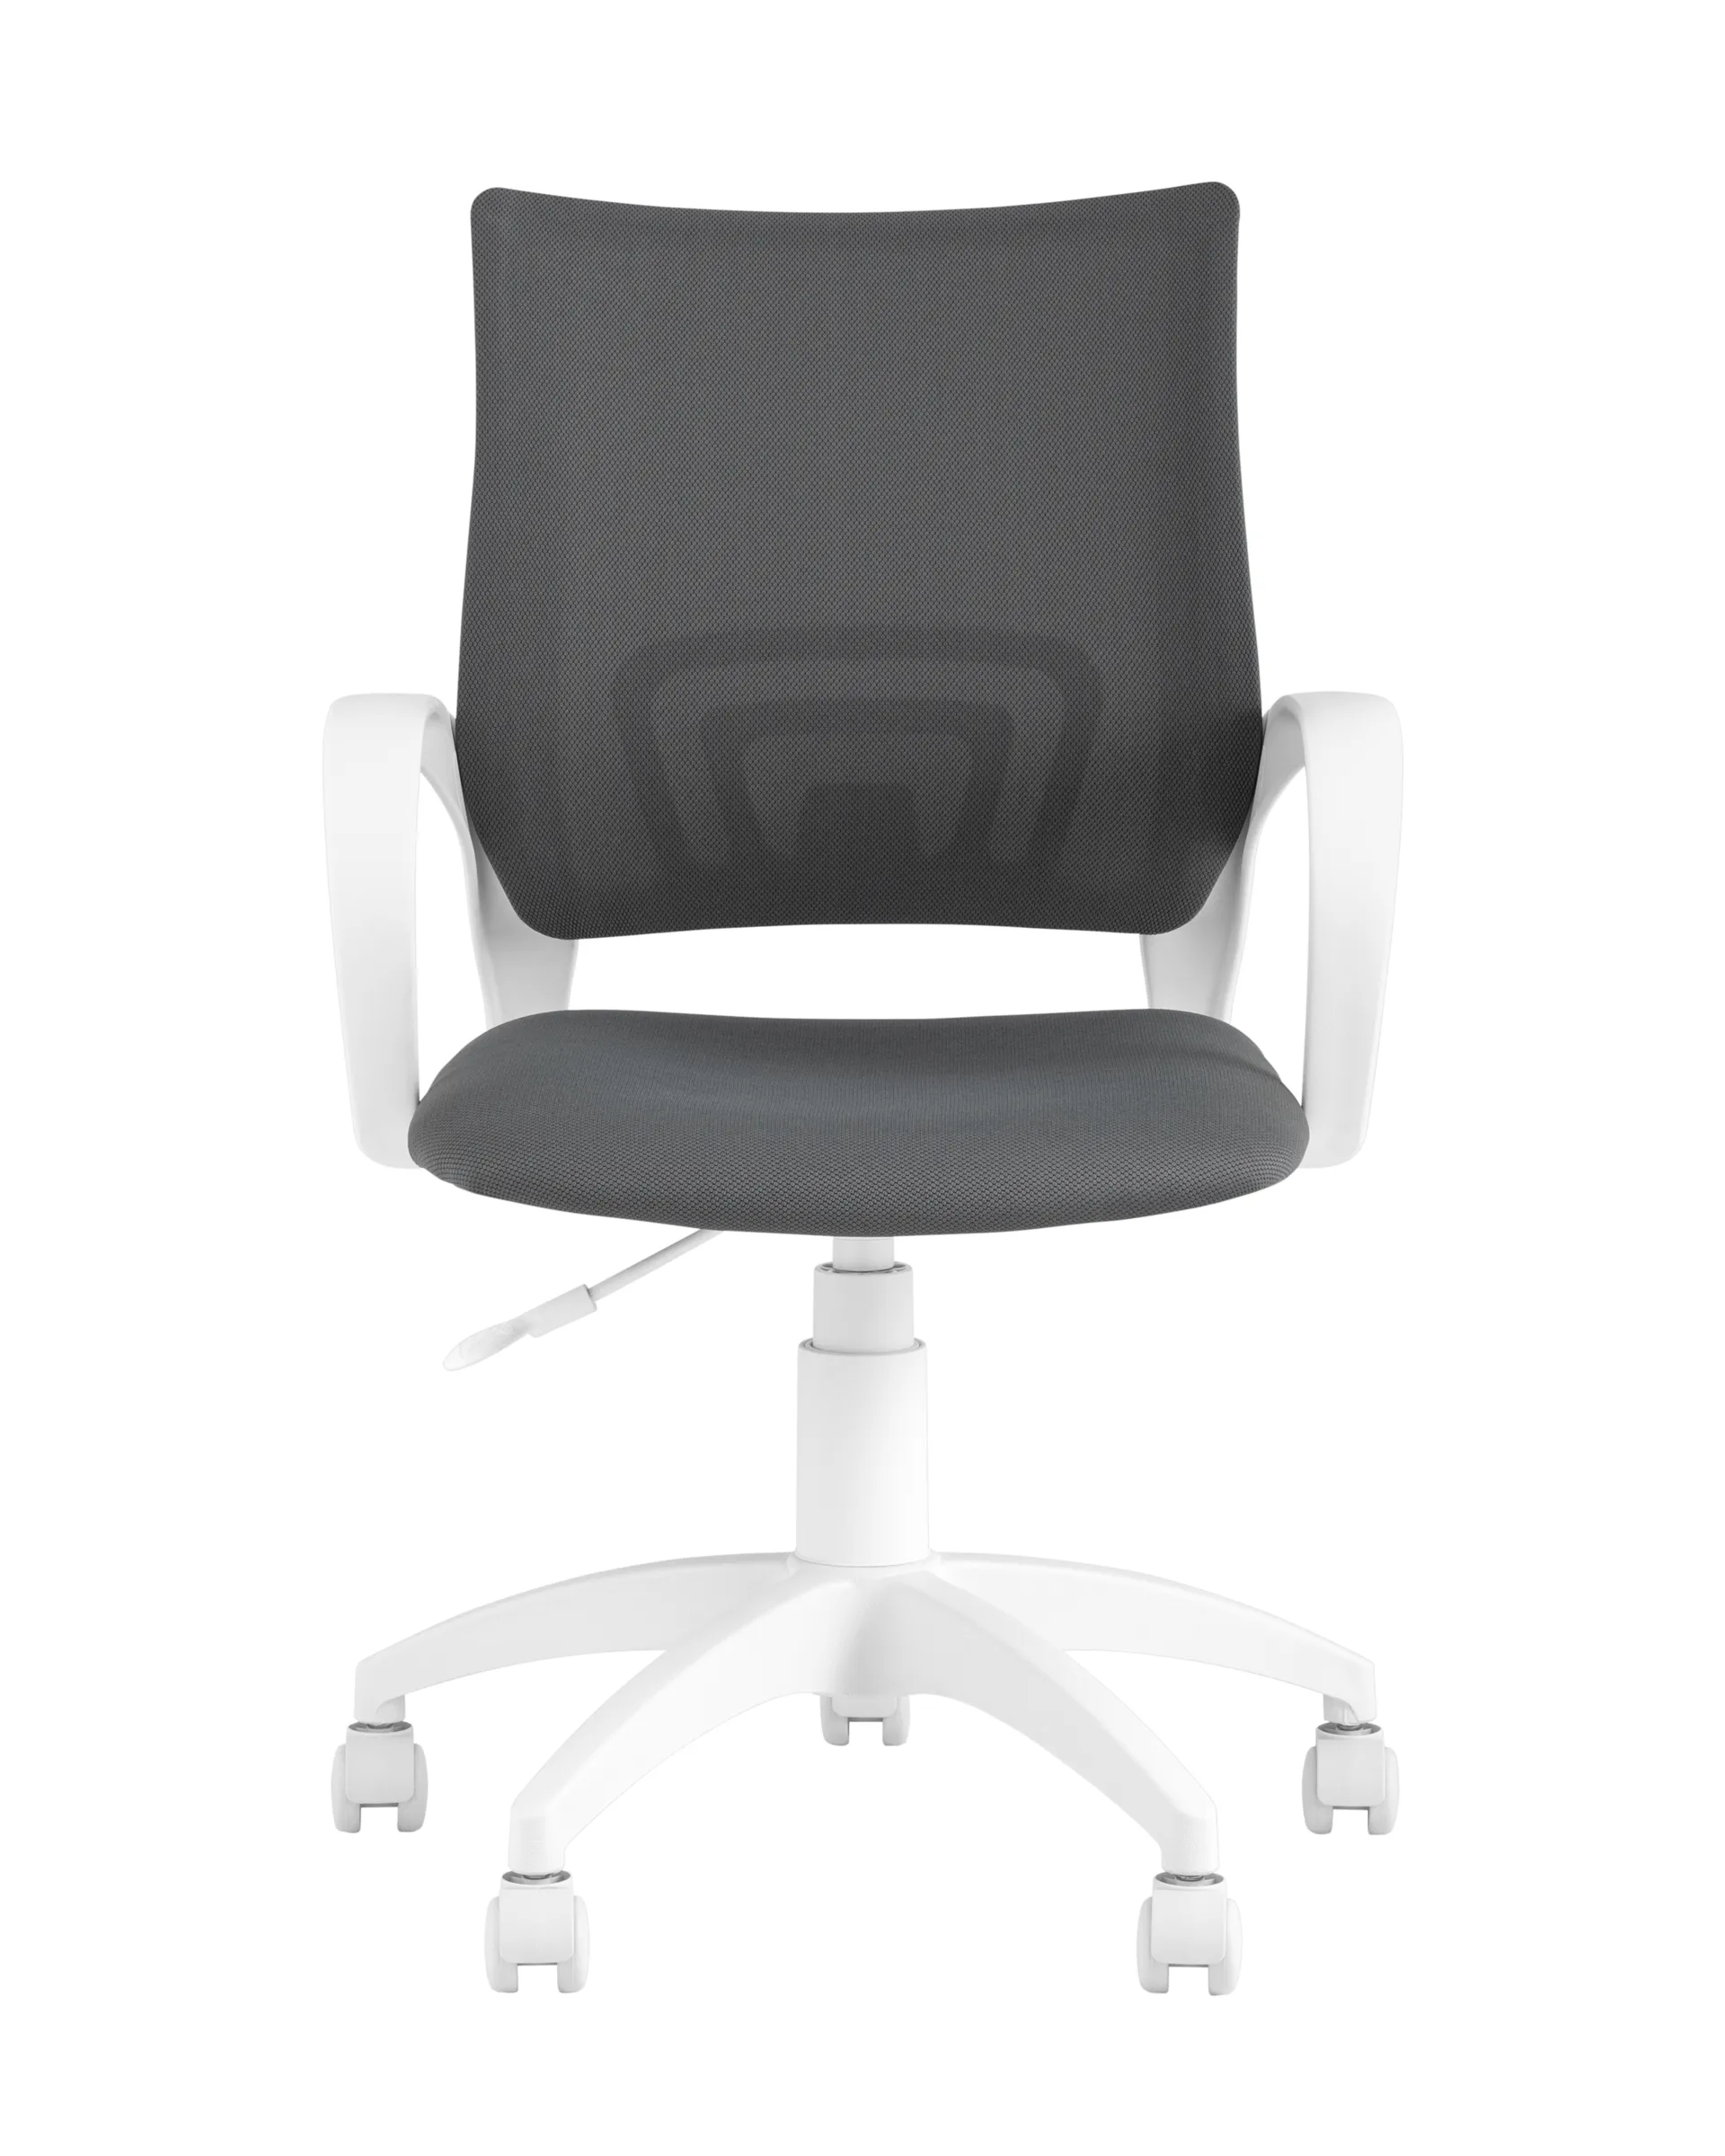 Кресло офисное Topchairs ST-BASIC-W серая ткань белый пластик